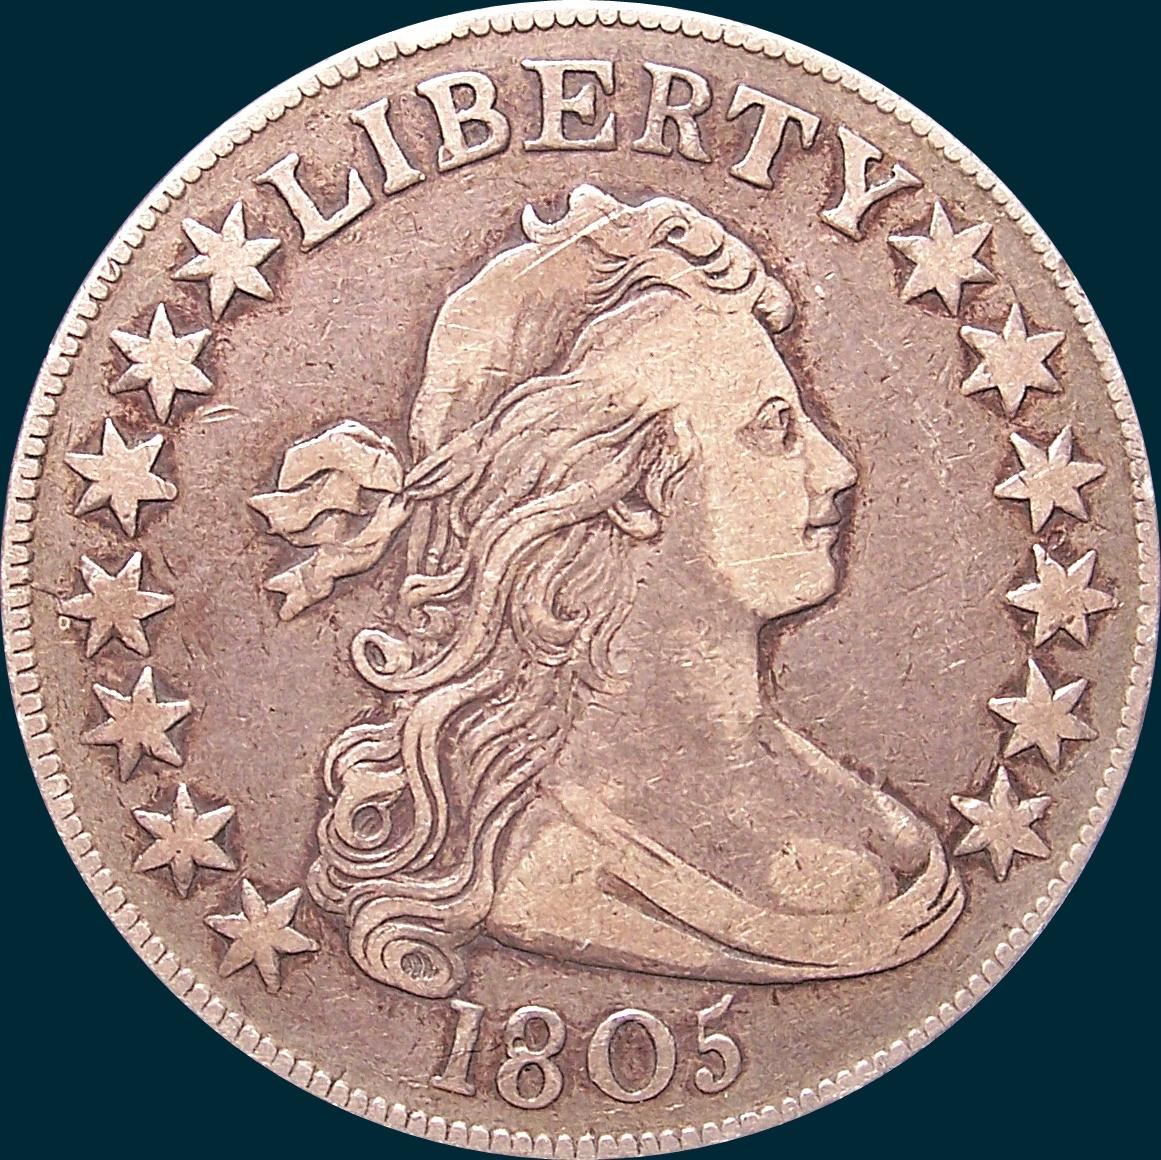 1805, O-112, Draped Bust, Half dollar